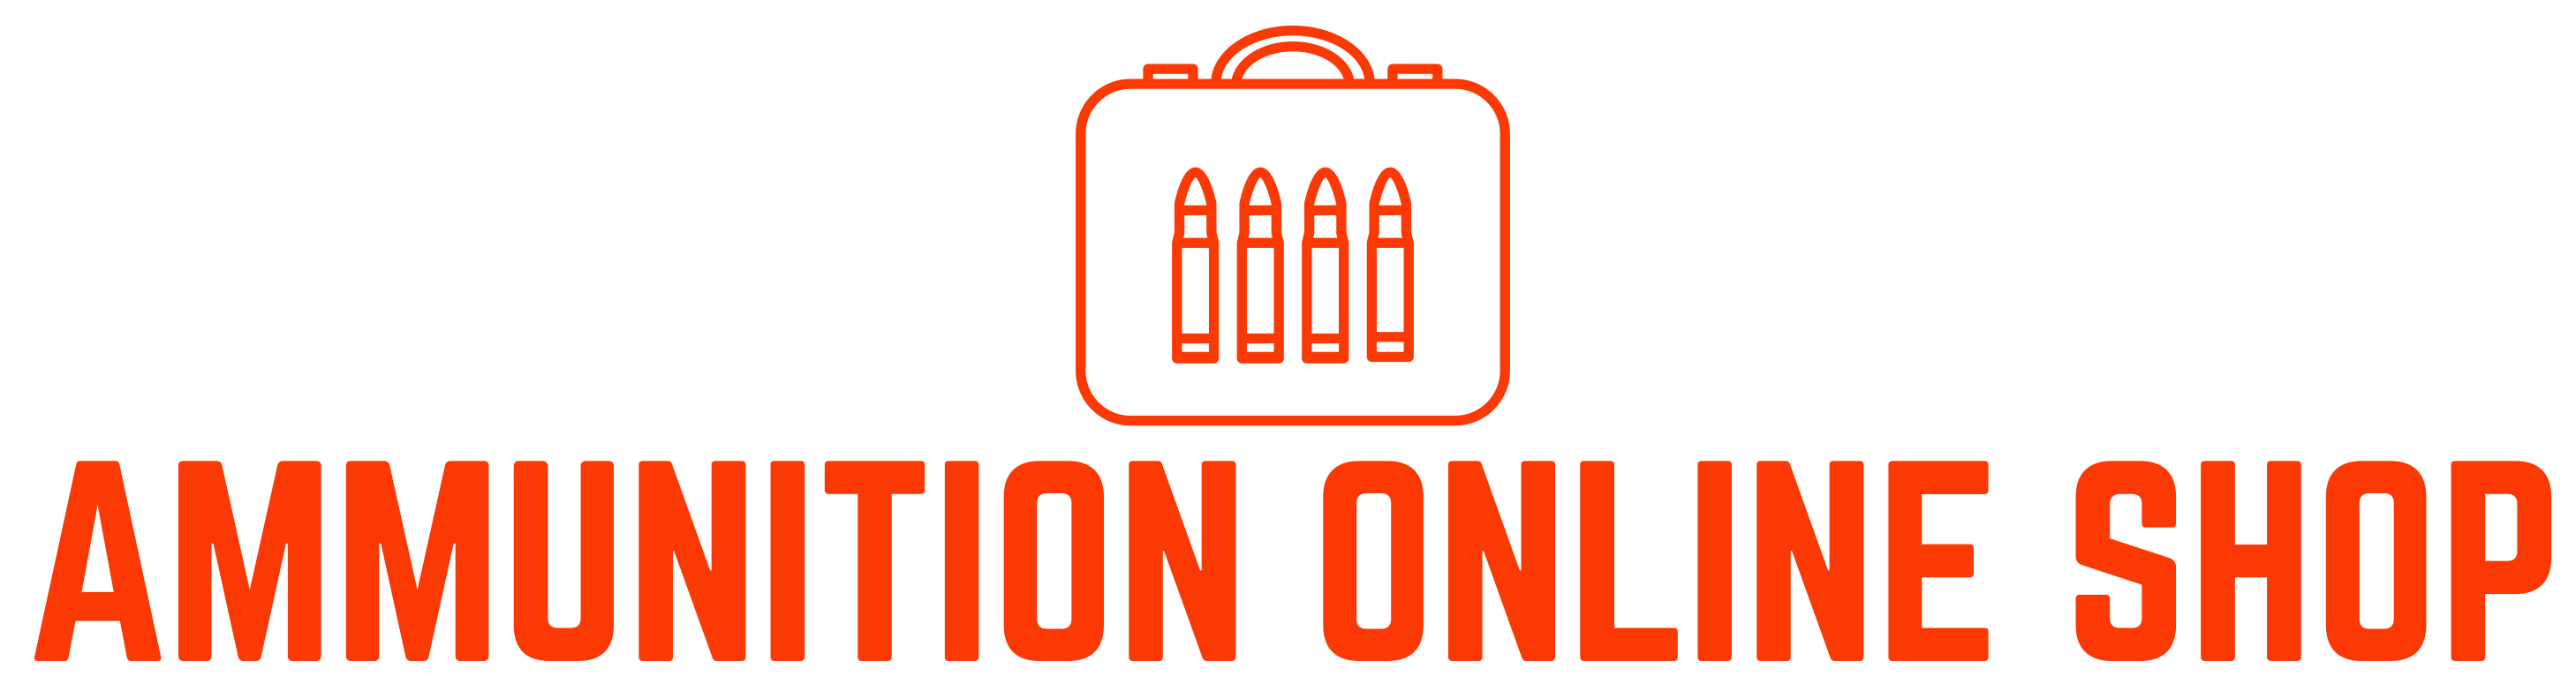 Ammunition Online Shop